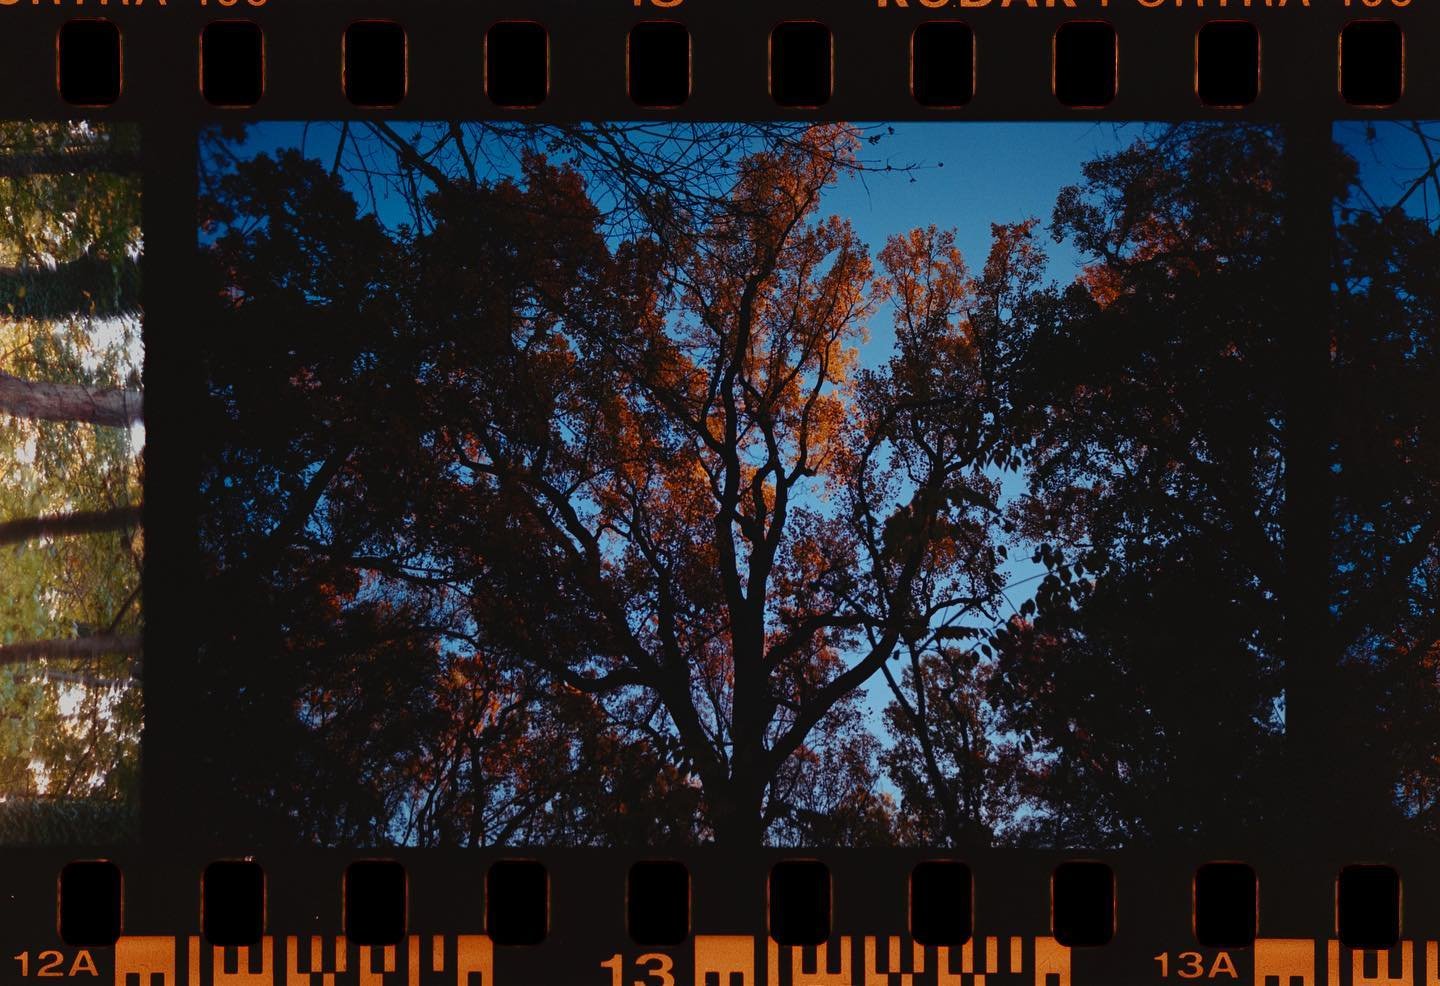 - Fall Trees -
Nikon FA 28mm f2.8
@kodak Porta 400 
.
Scanned with @negative.supply
On @fujifilmx_us GFX100S
Converted with @negativelabpro 

@nikonusa #filmisnotdead #kodak #kodakportra400 #kodakportra #filmphoto #nikonfa #treescape